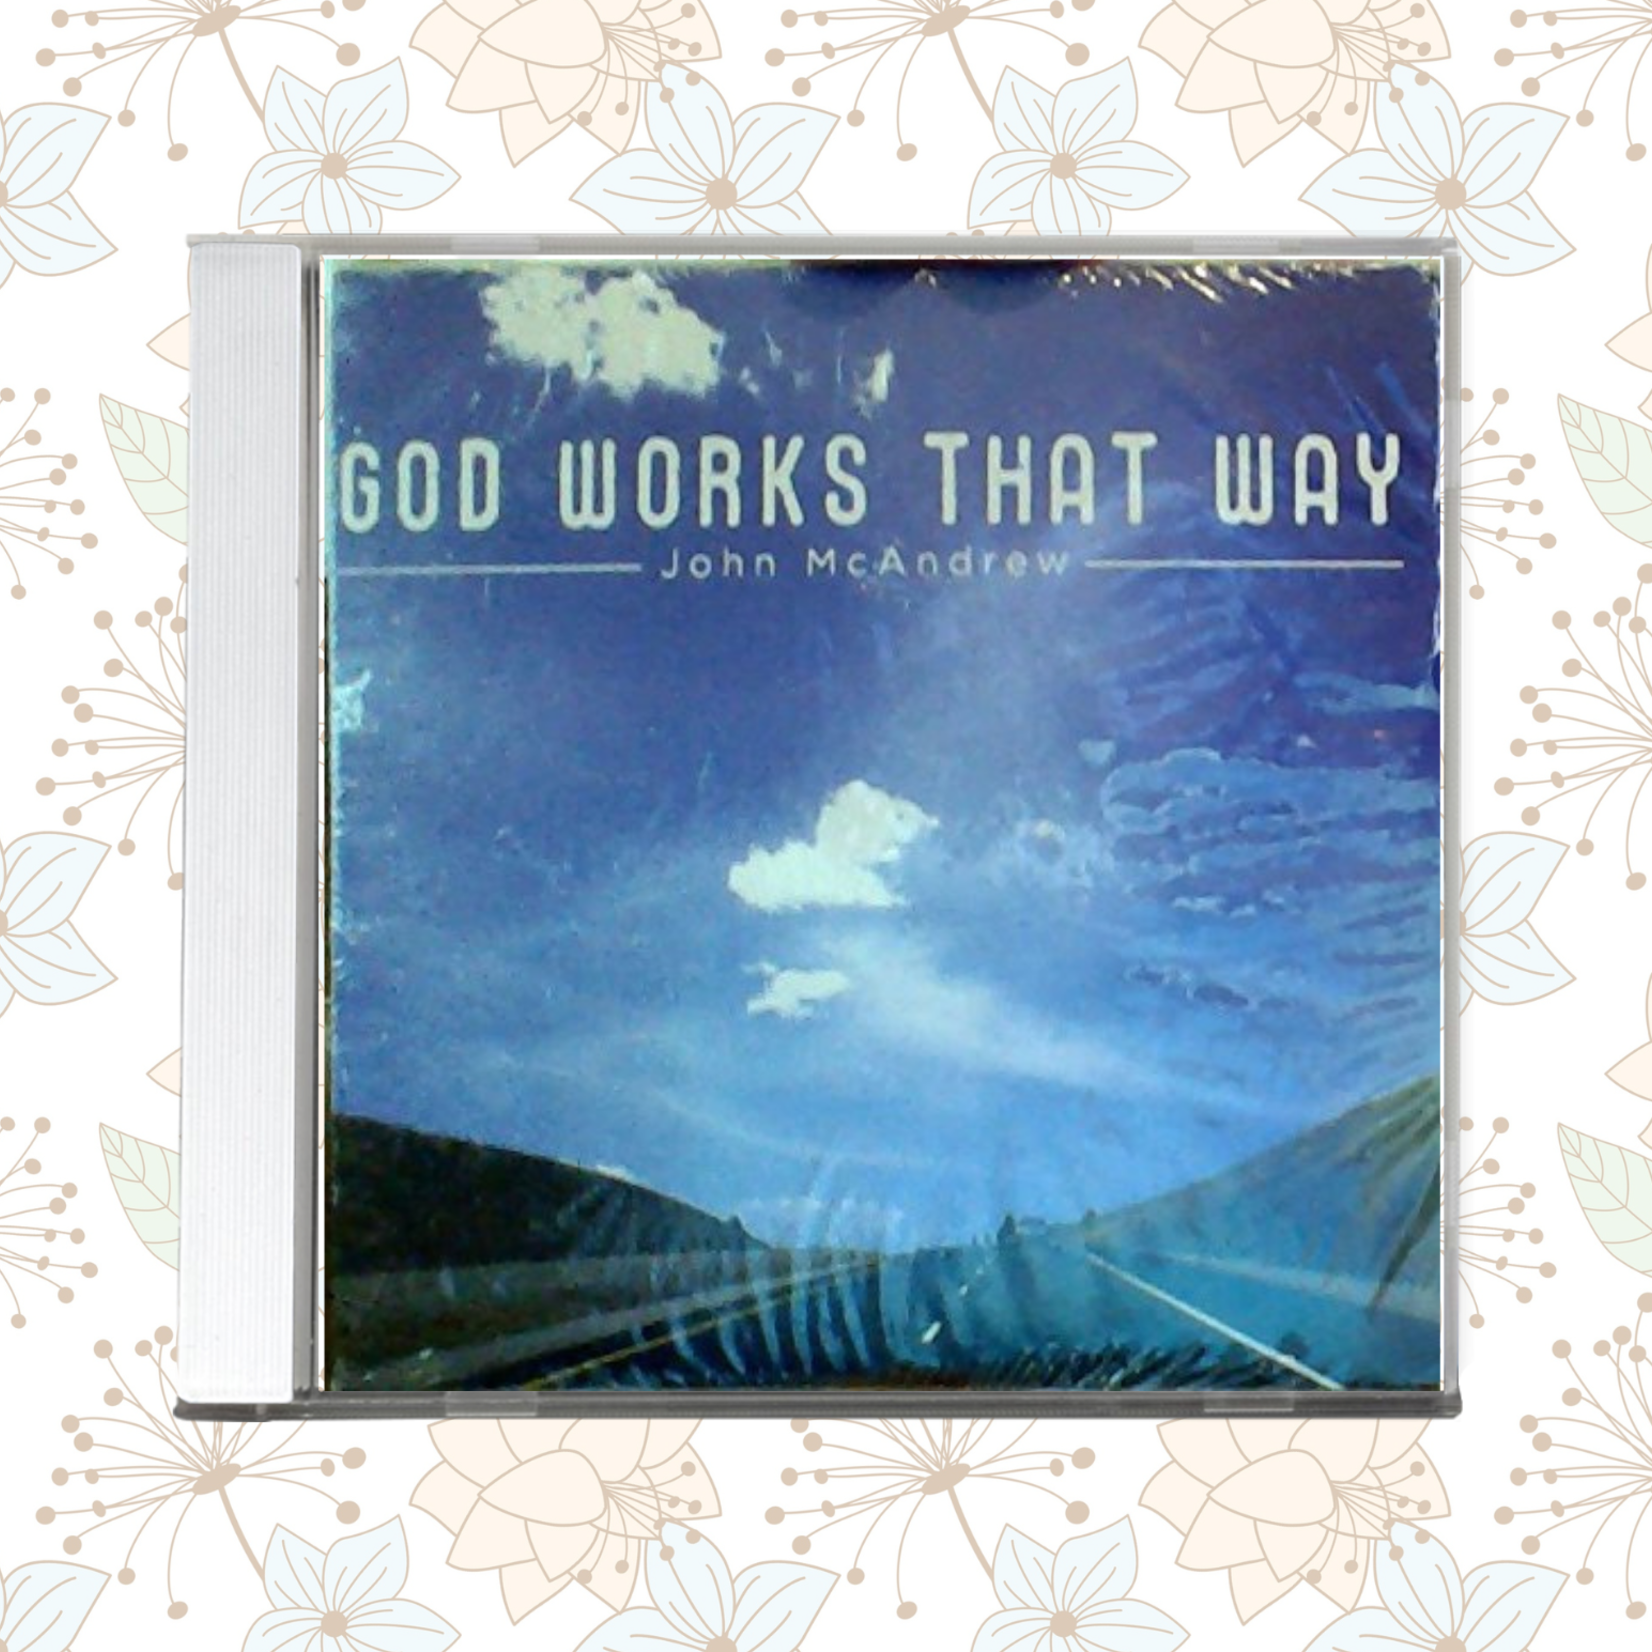 [CD] God Works That Way by John McAndrew